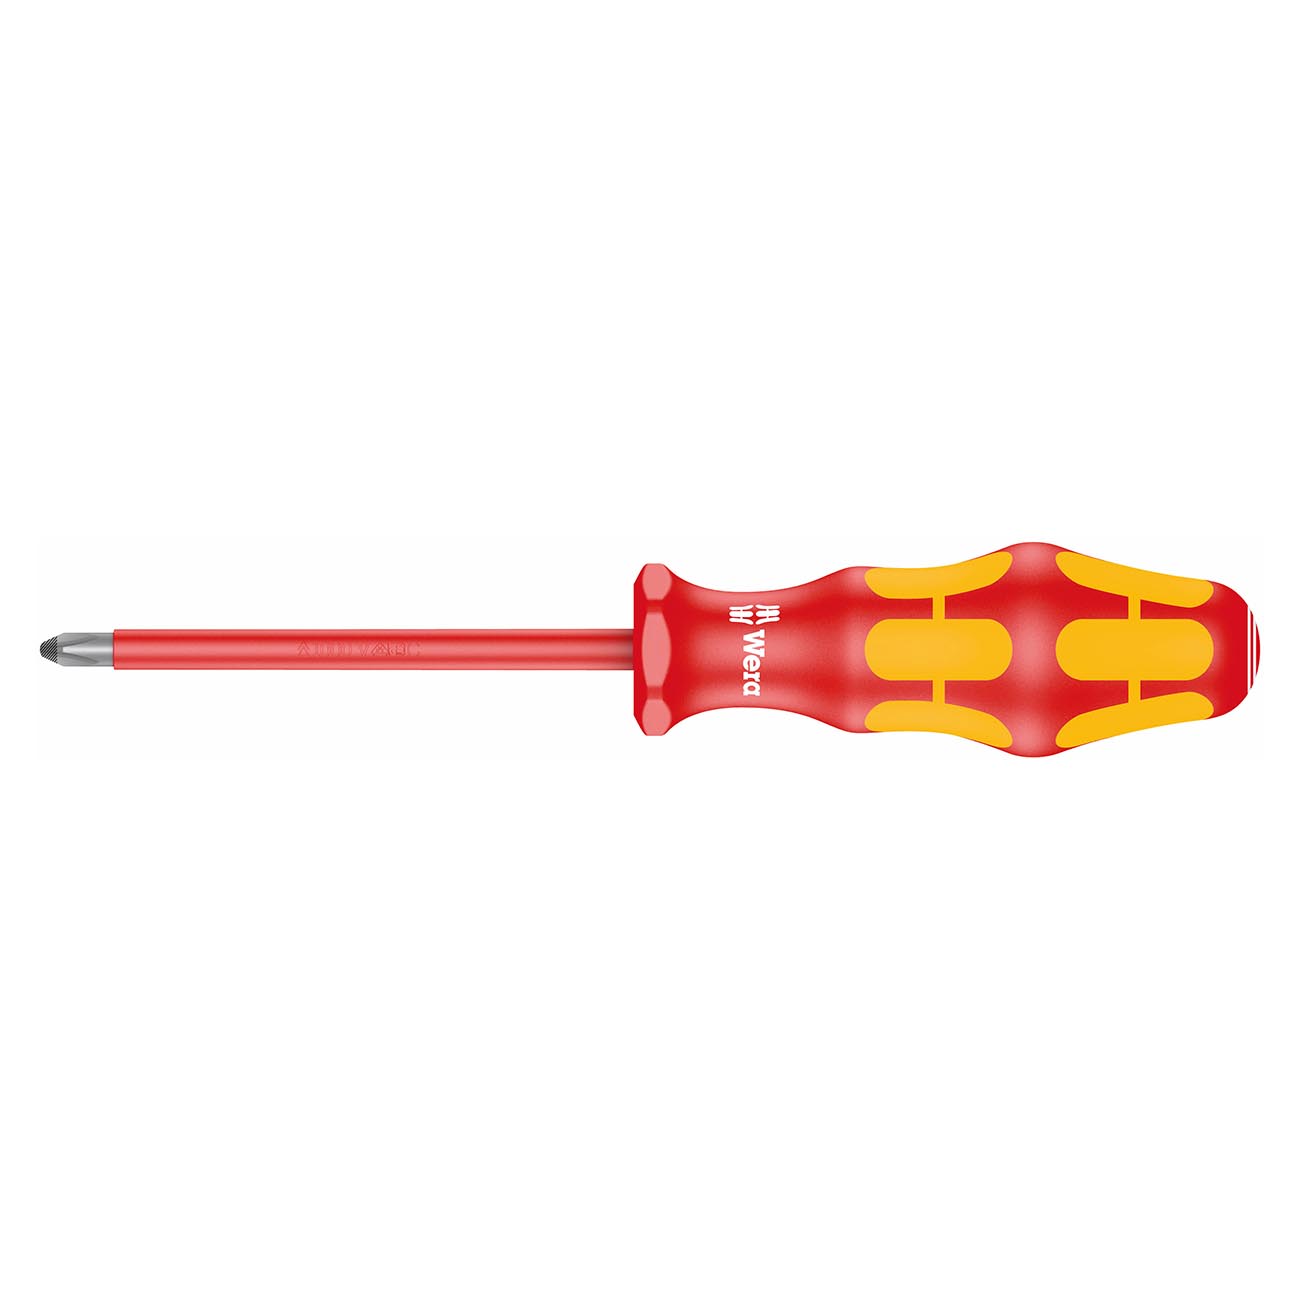 Wera Kraftform VDE Insulated screwdriver for PH #2 Phillips Screws